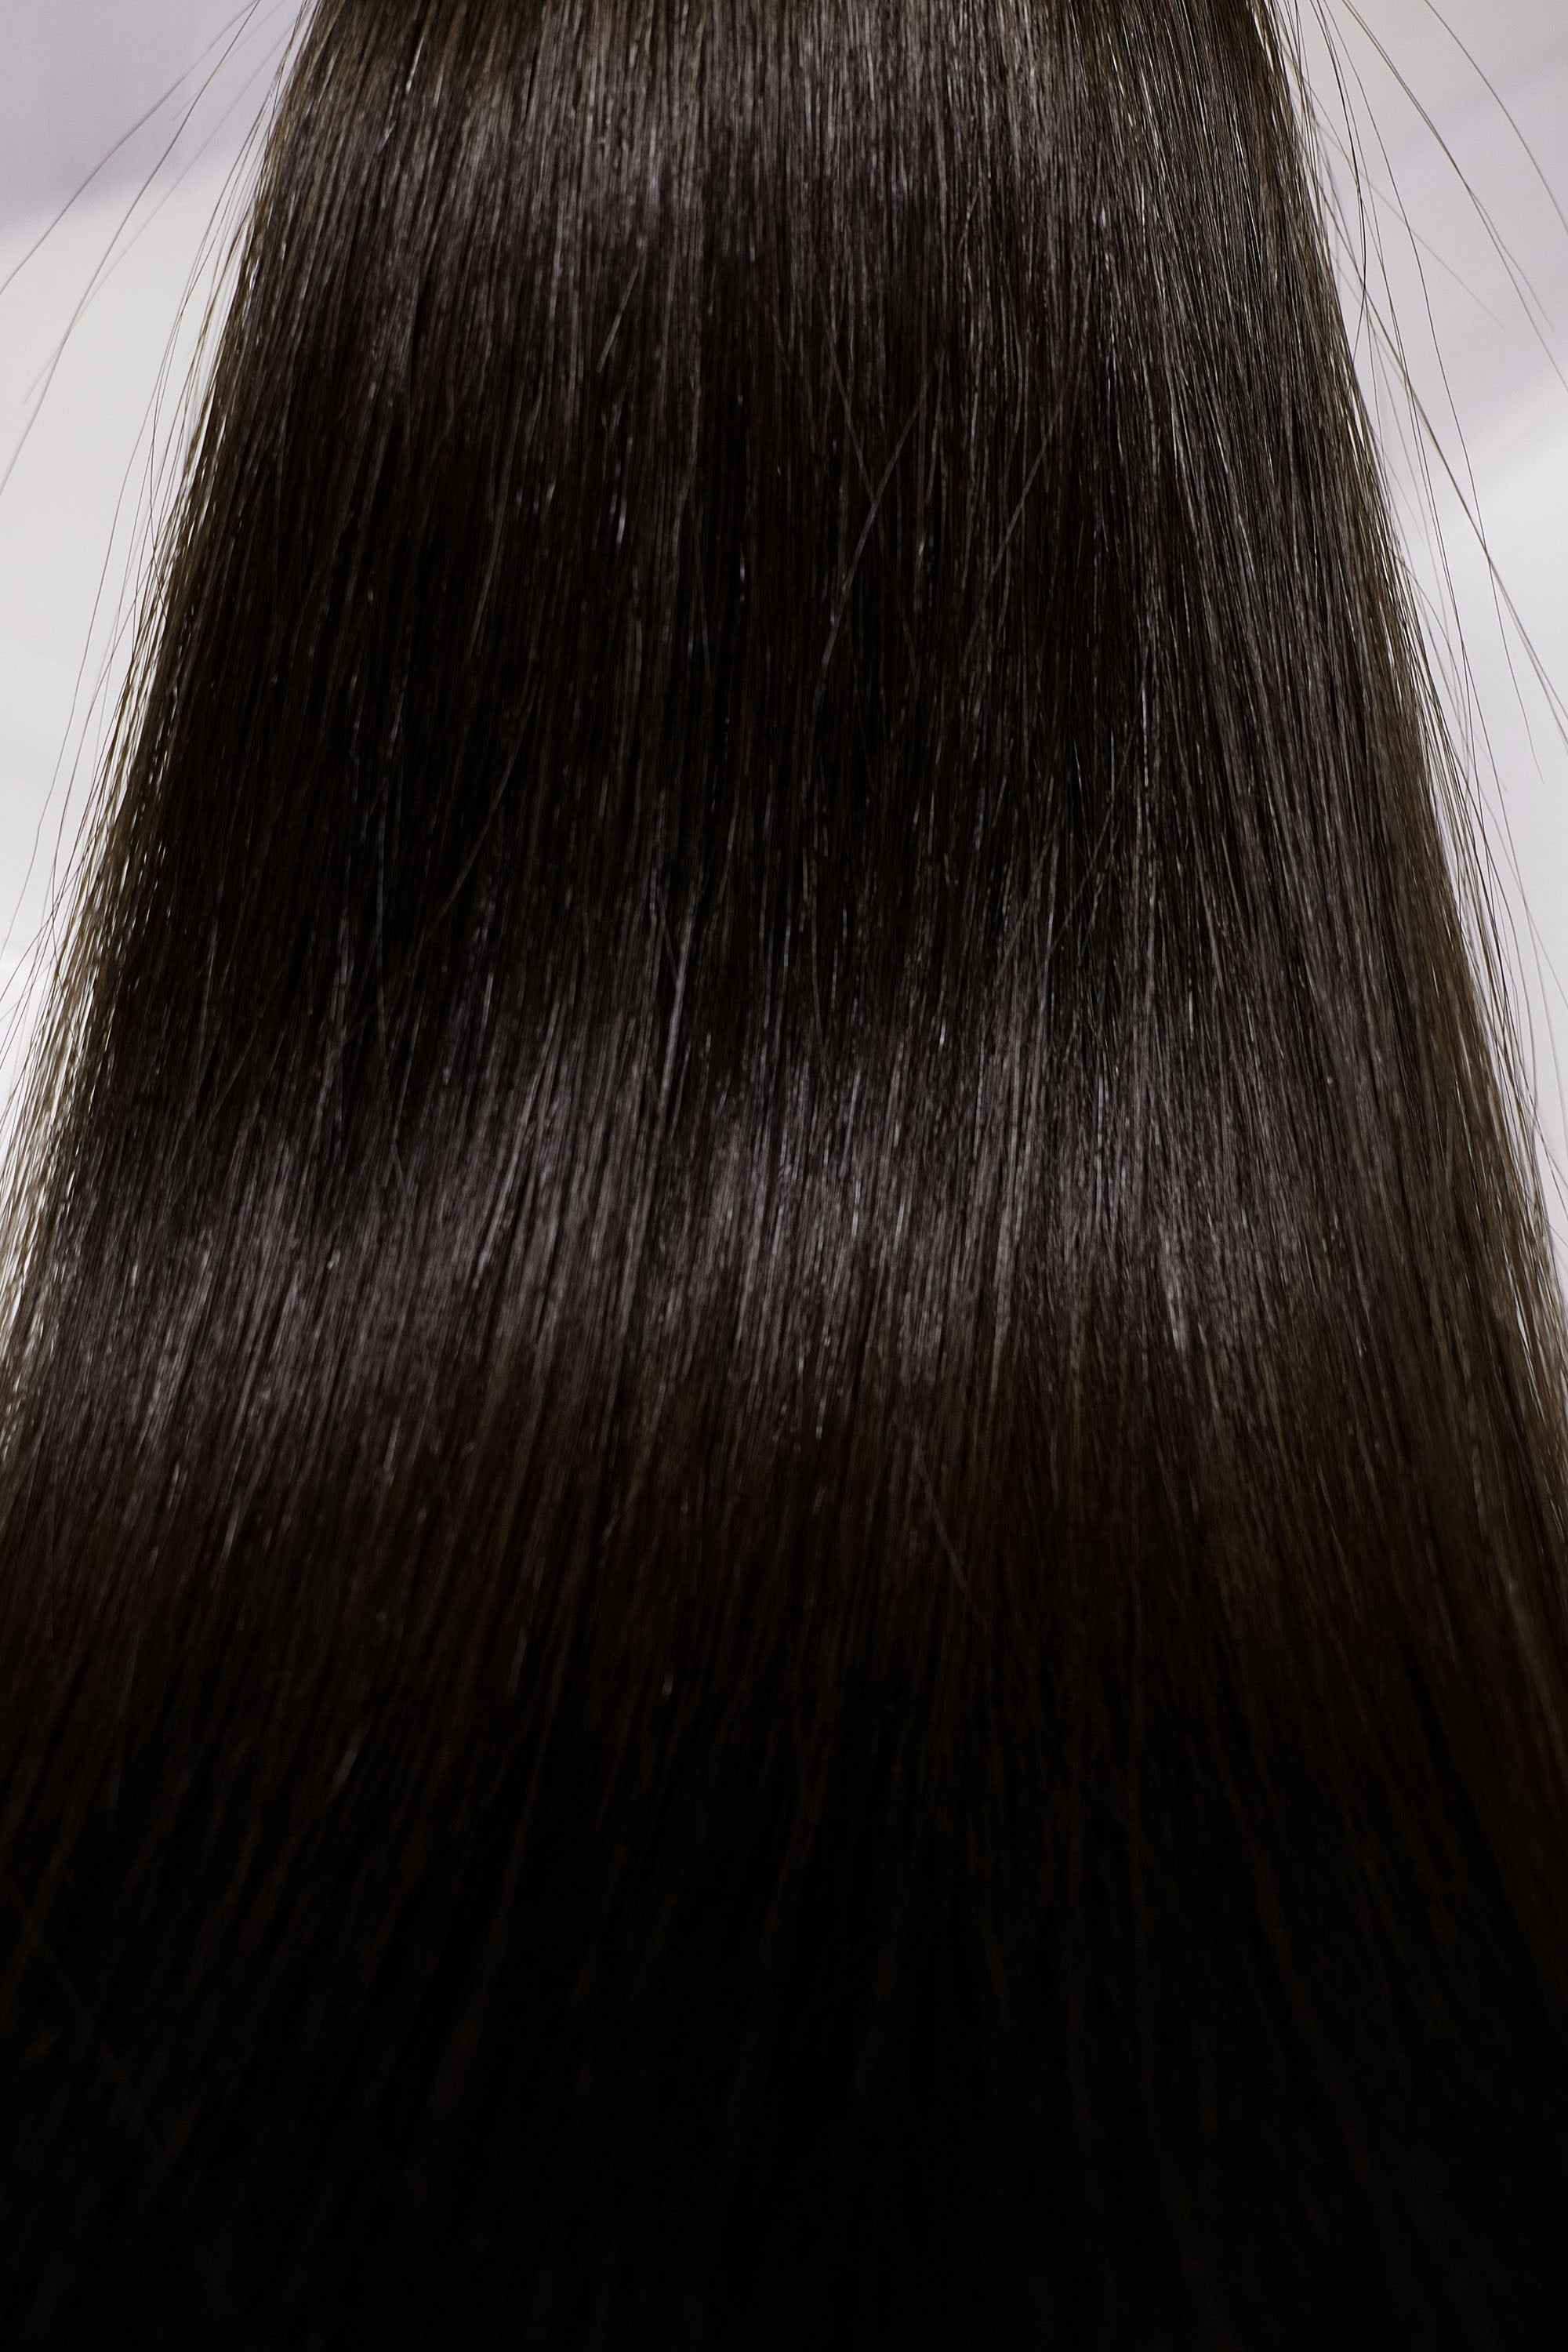 Behair professional Keratin Tip "Premium" 26" (65cm) Natural Straight Natural Black #1B - 25g (Micro - 0.5g each pcs) hair extensions